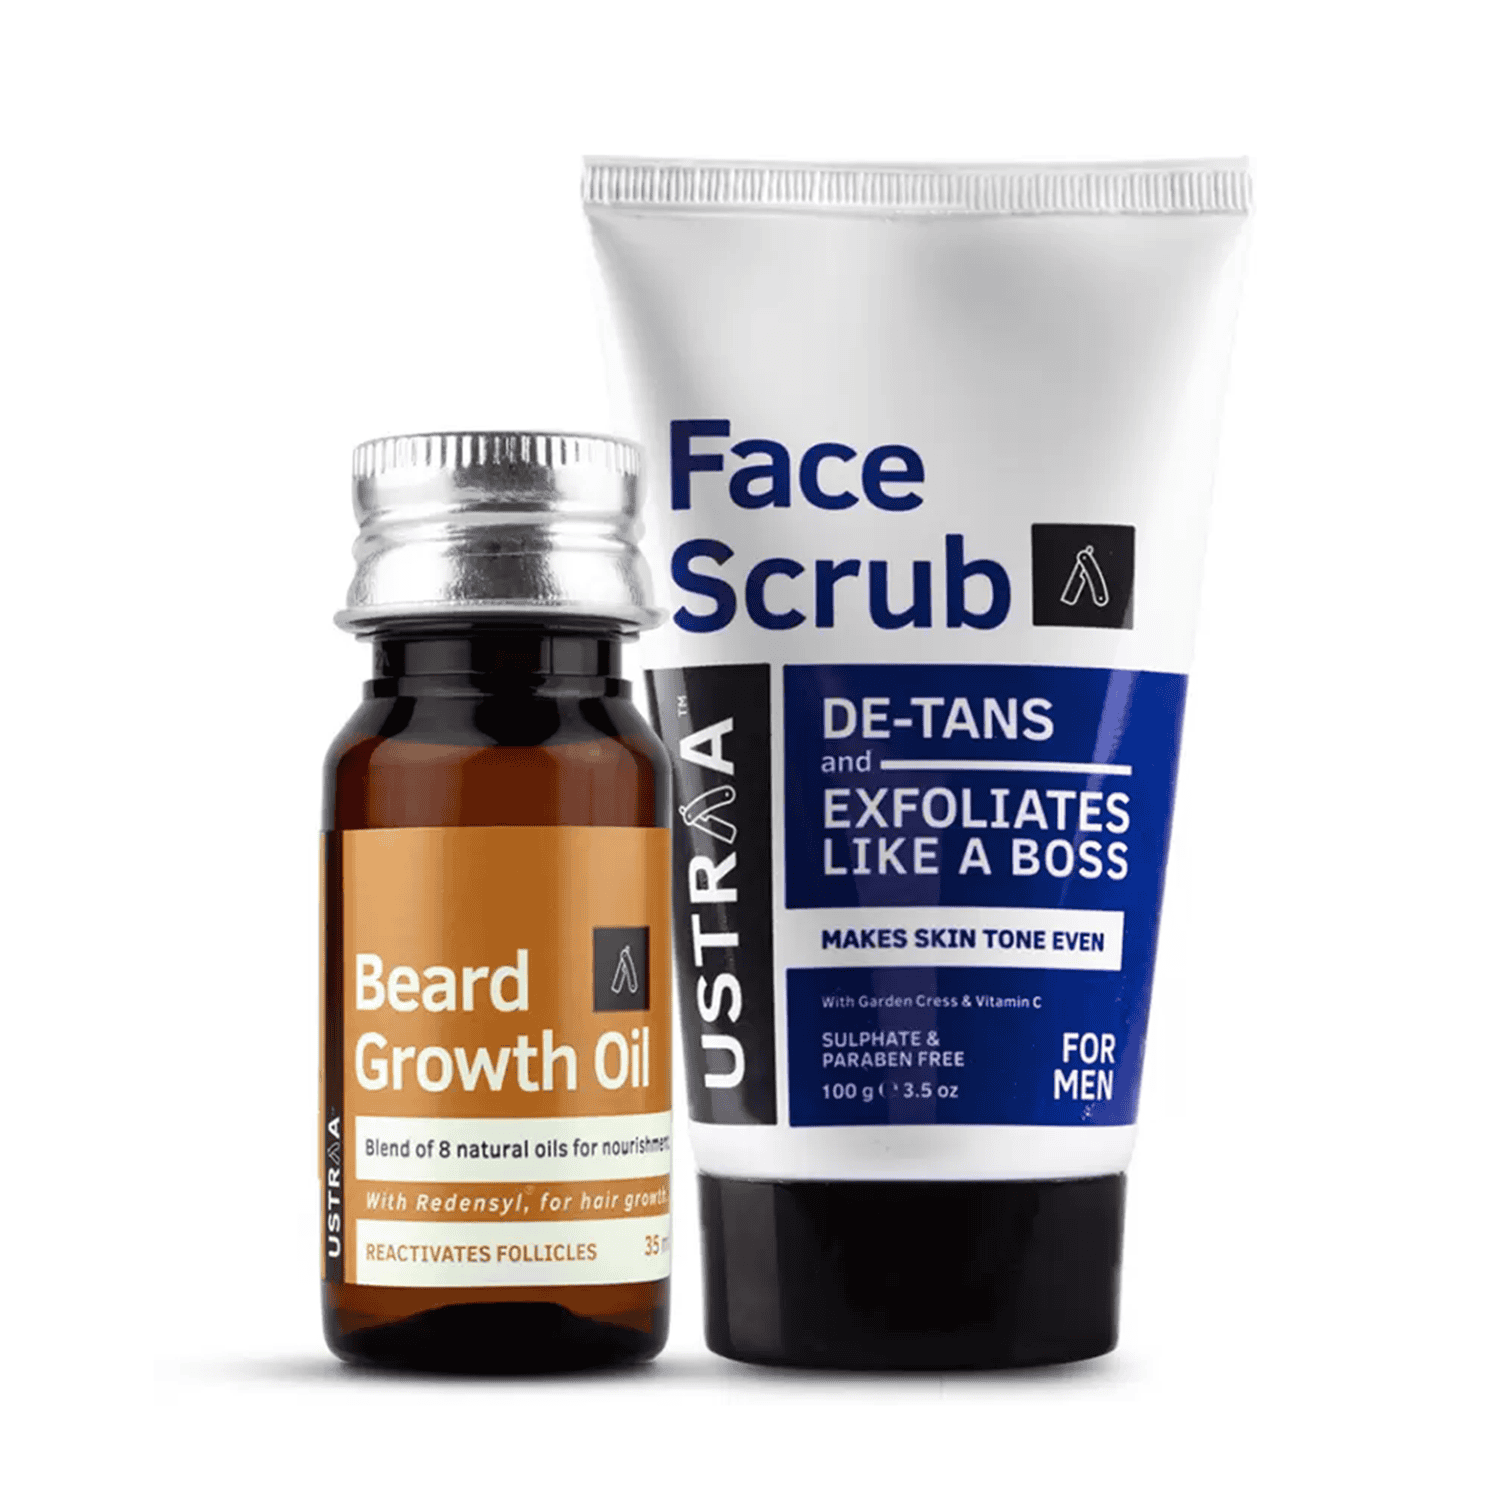 Ustraa | Ustraa Beard Growth Oil & De-tan Face Scrub